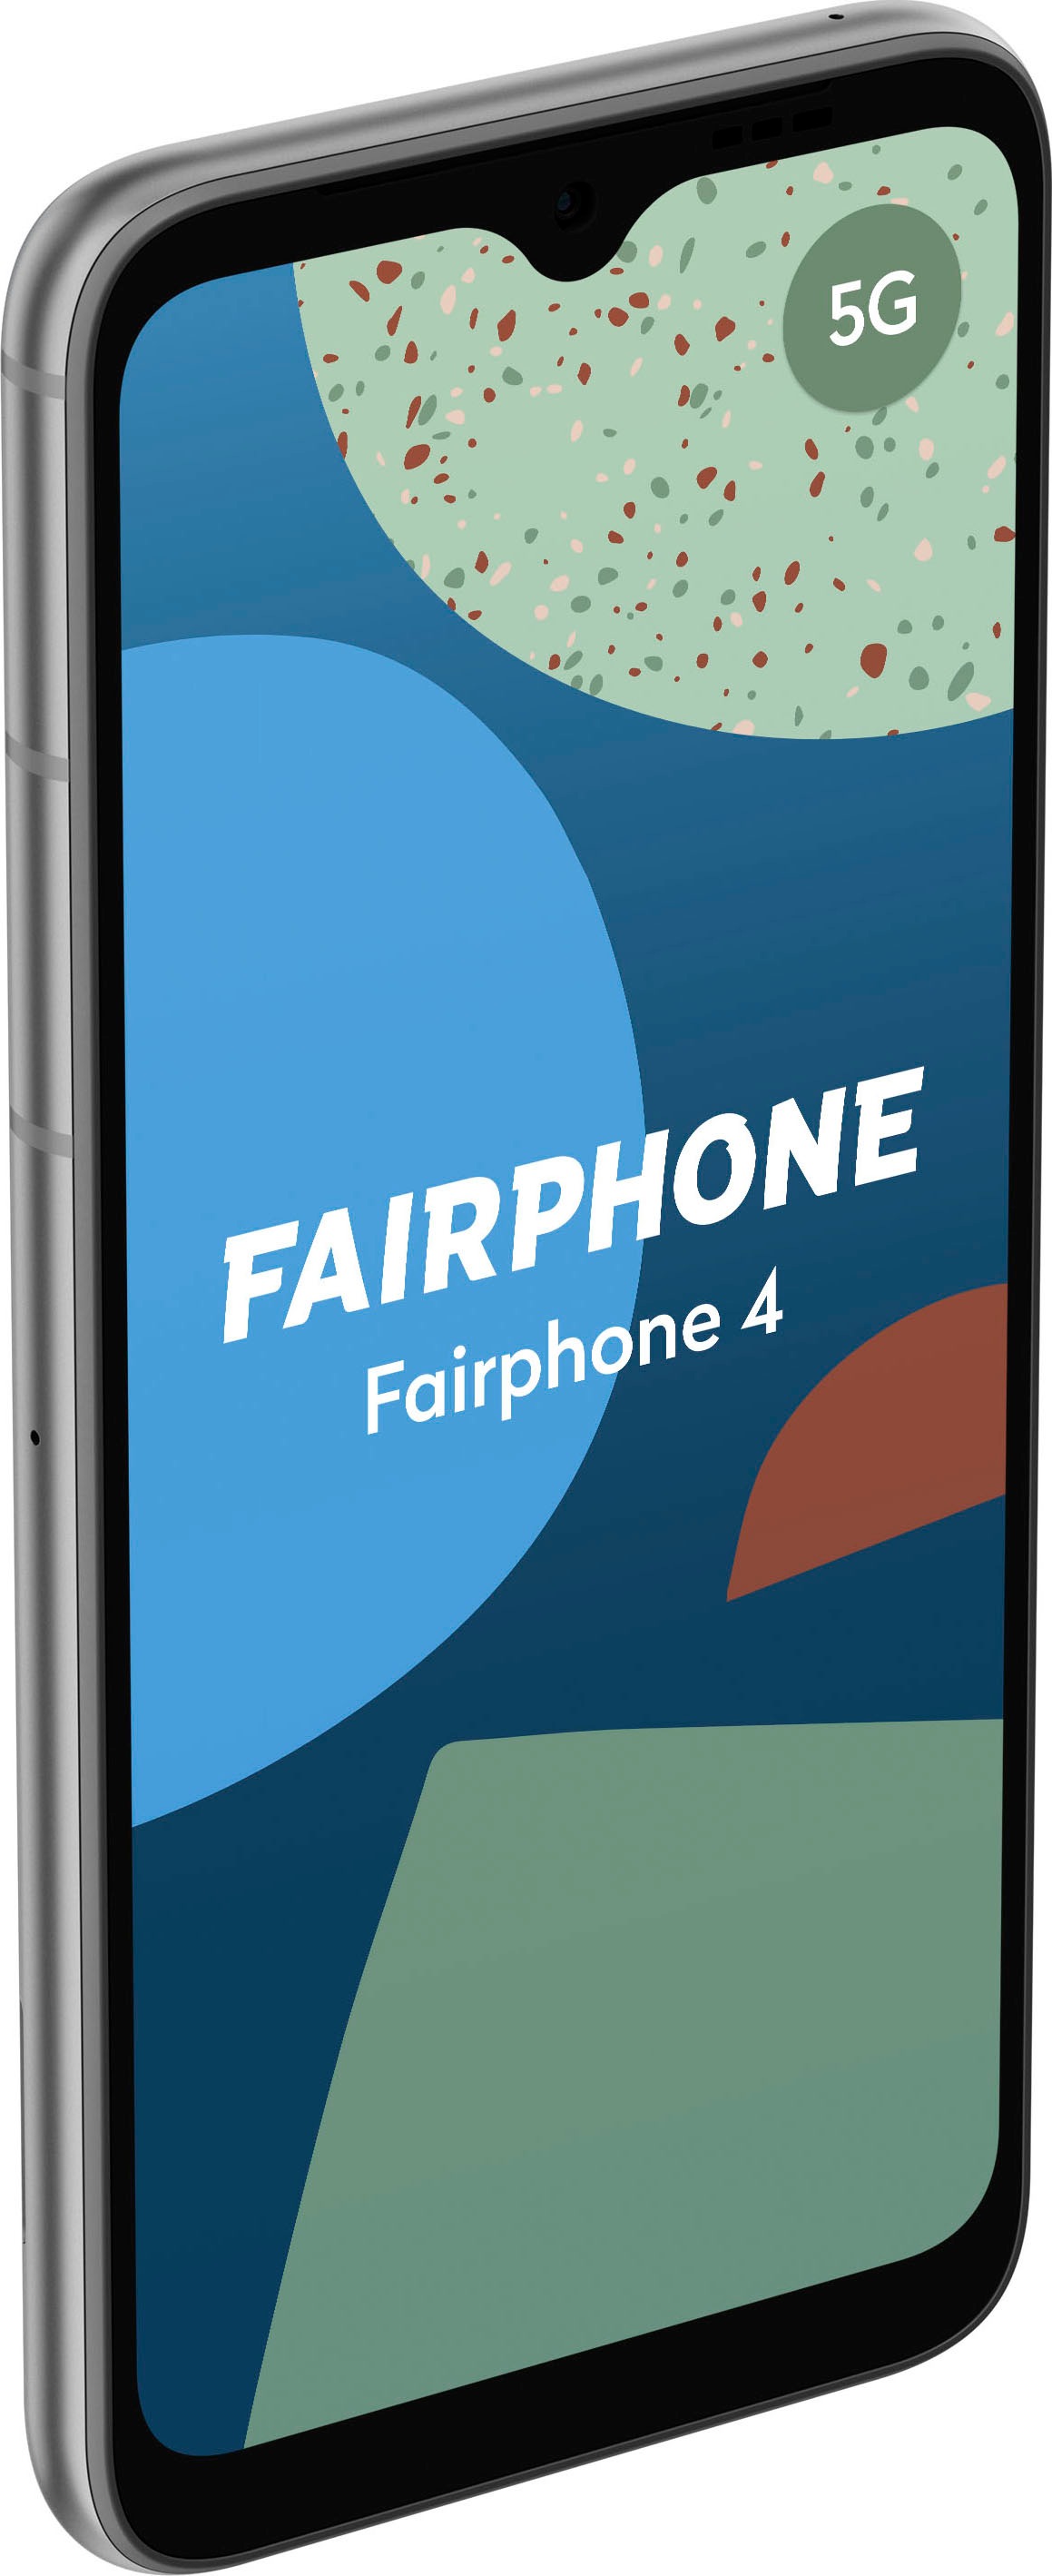 128 Smartphone 16 cm/6,3 Zoll, grau, Kamera kaufen 4«, MP 48 »Fairphone Fairphone GB online Speicherplatz,